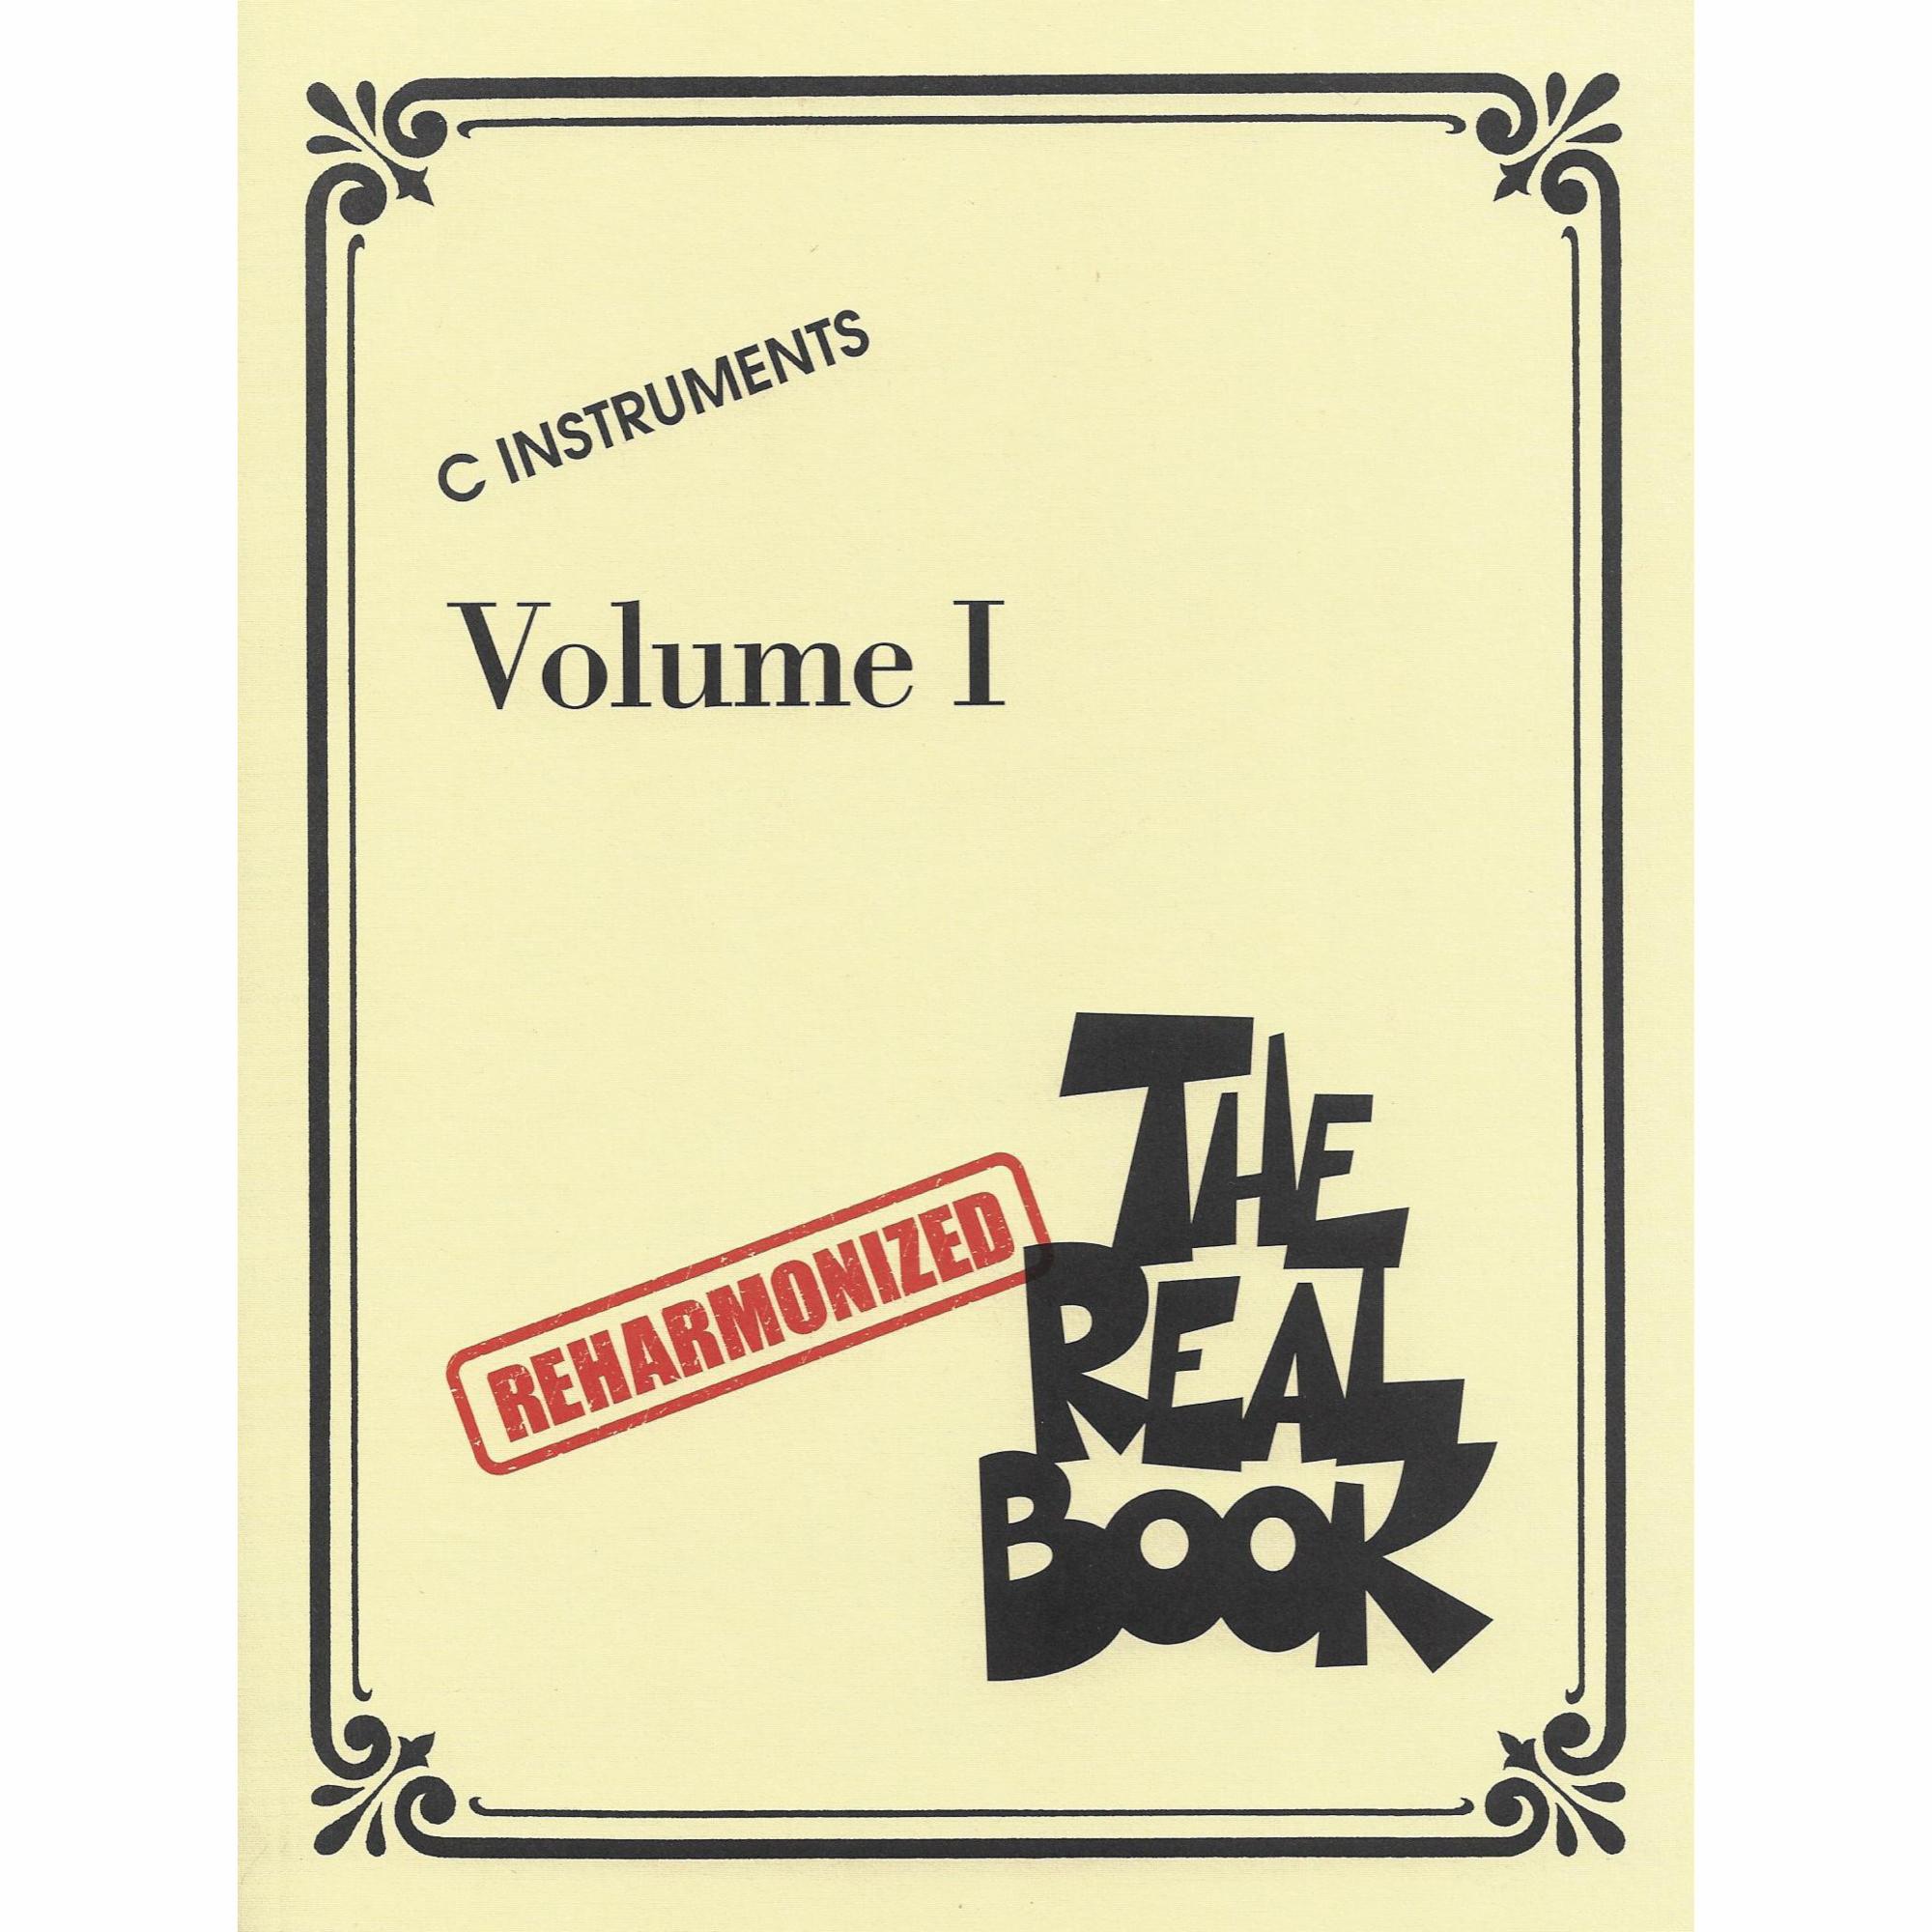 The Real Book, Volume I (Reharmonized)